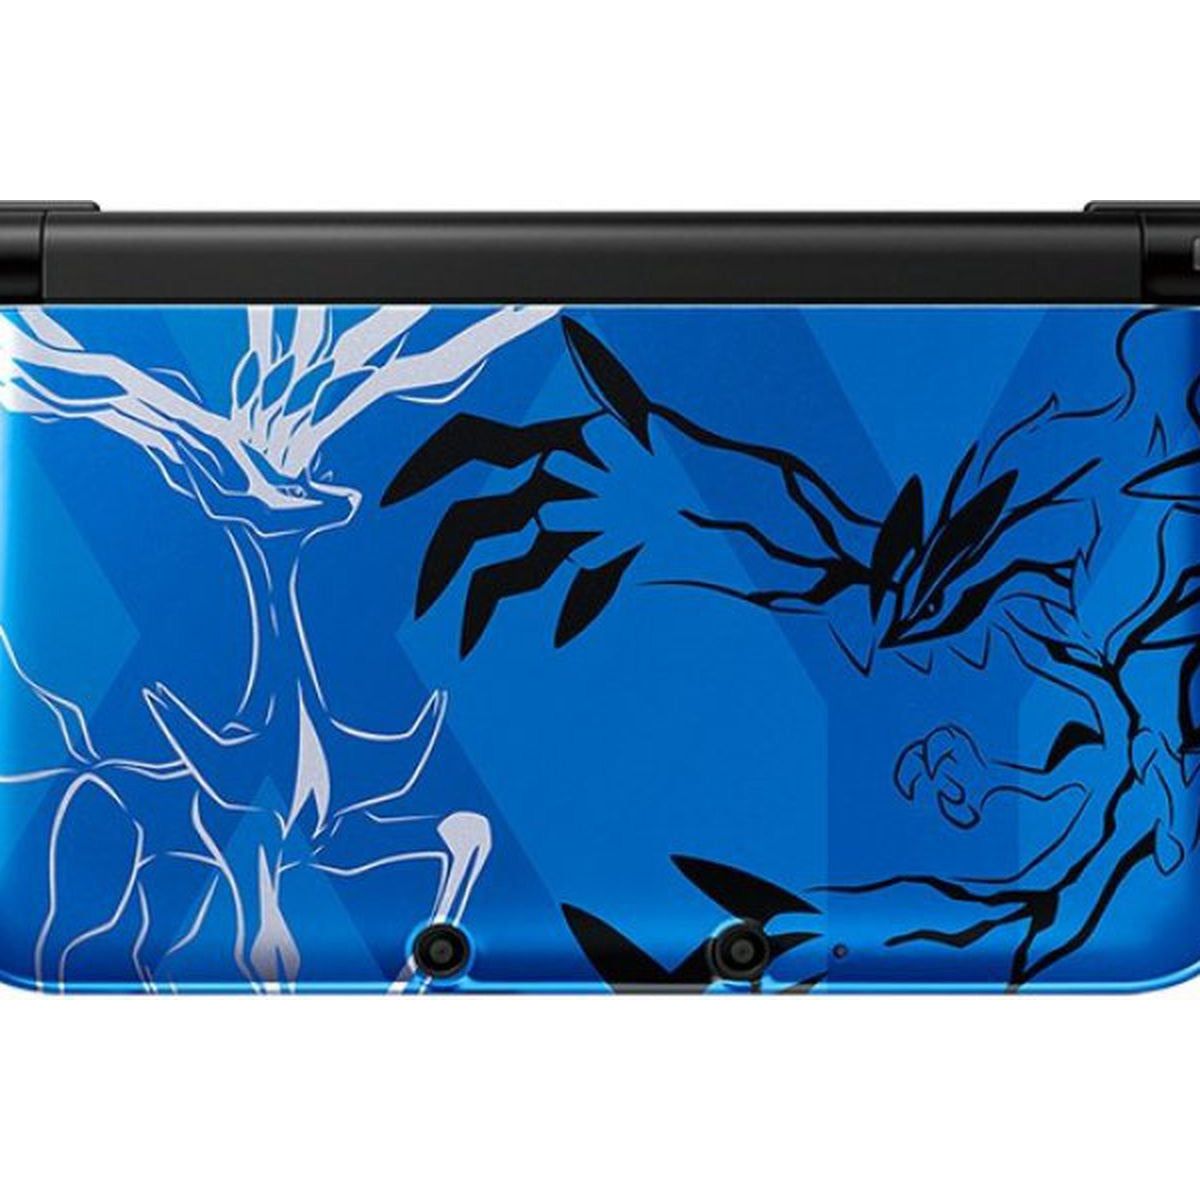 3DS XL System (Pokemon X & Y Blue)